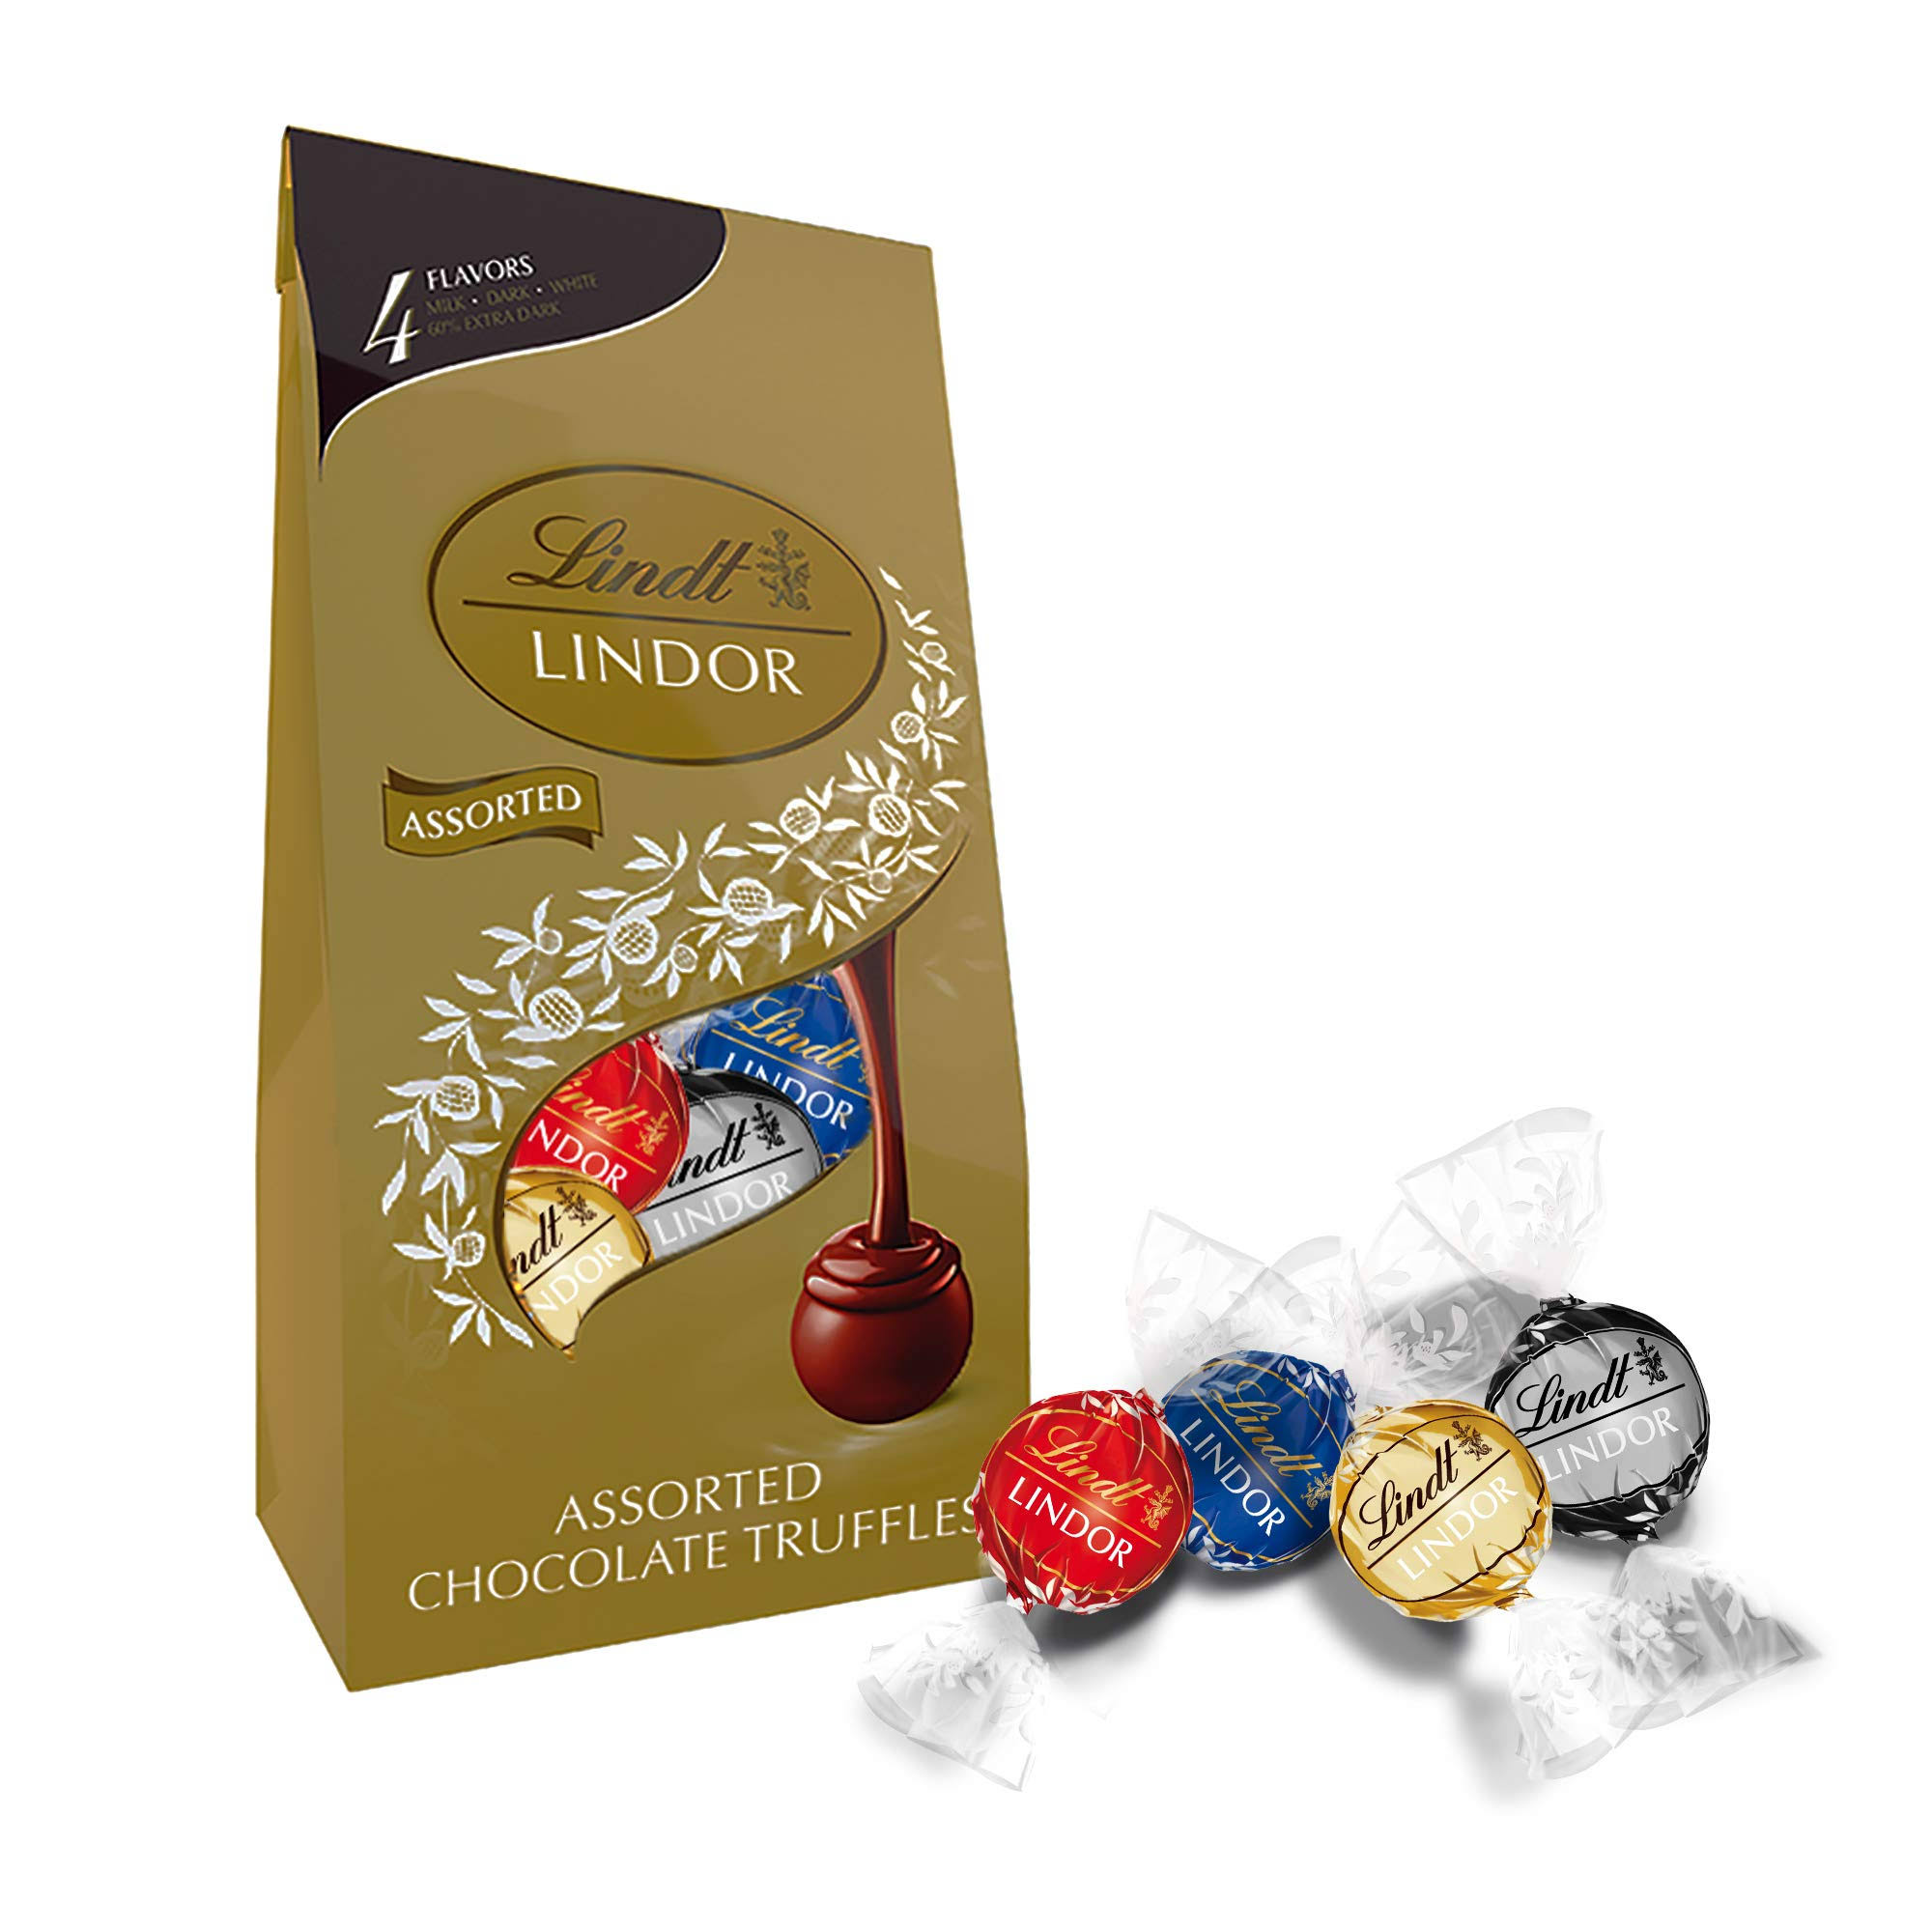 Lindt LINDOR Assorted Chocolate Truffles - 19oz, 4 Flavors